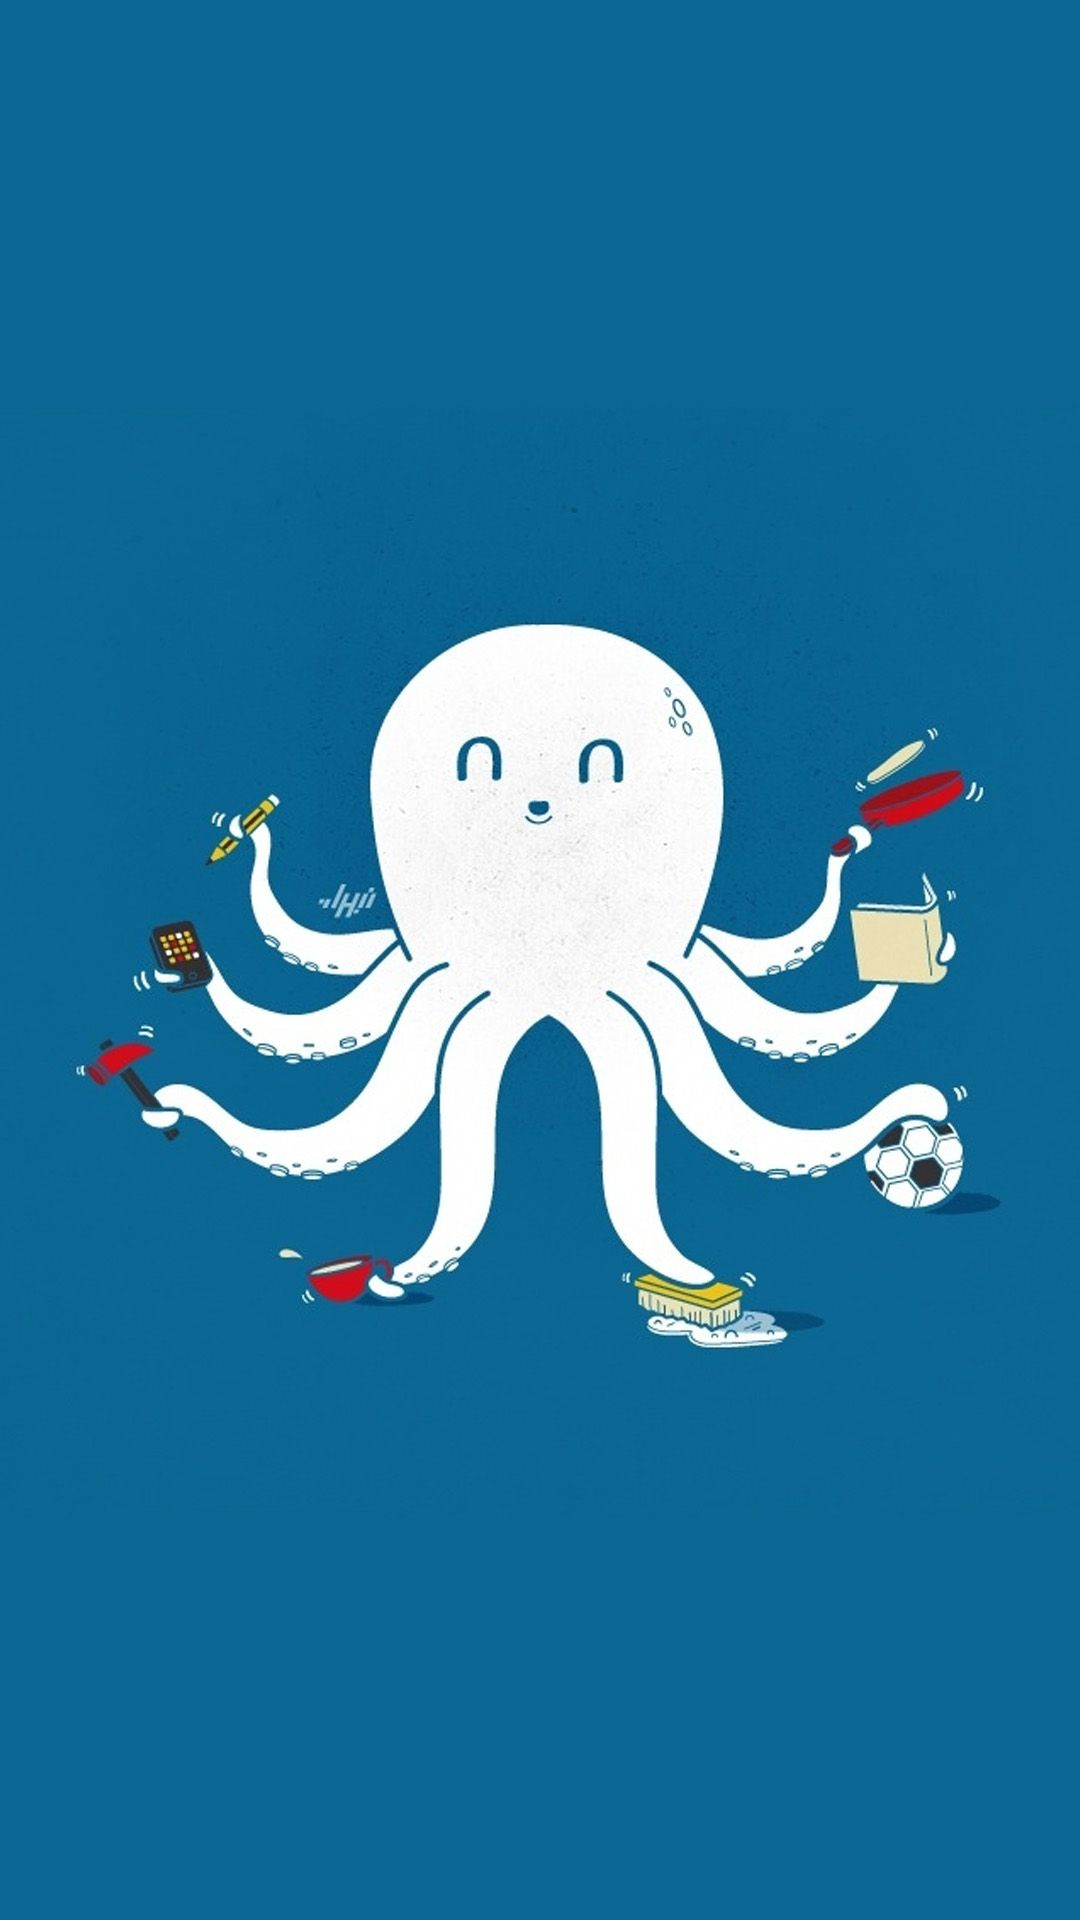 1080x1920 Octopus Multitask | Funny iphone wallpaper, Animal wallpaper, Cartoon wallpaper